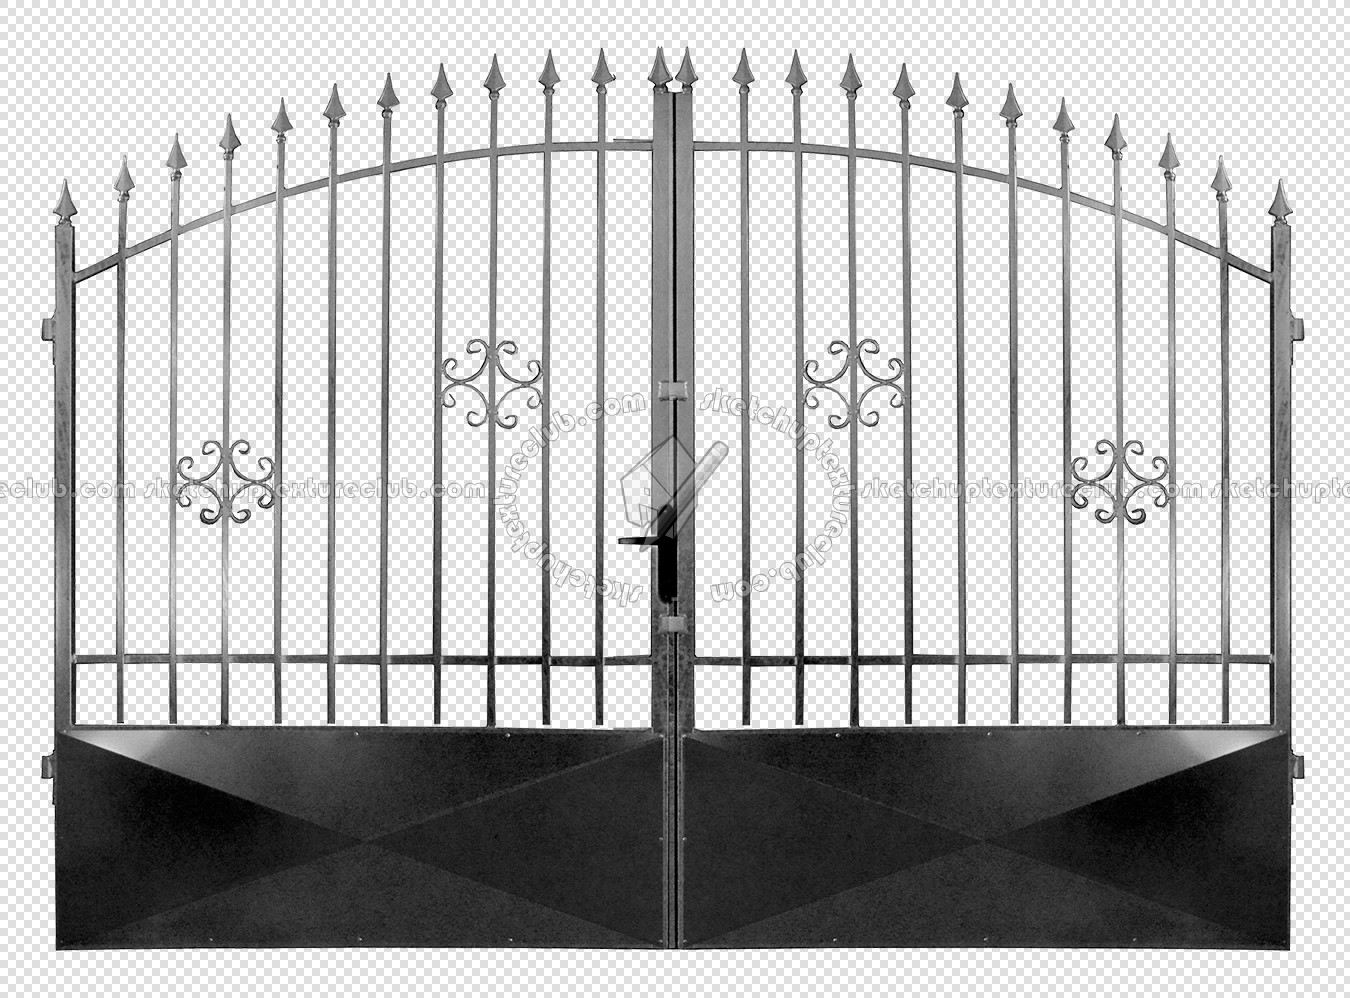 Sketchuptexture Cut out iron entrance gate texture 18625 Textures - ARCHITE...